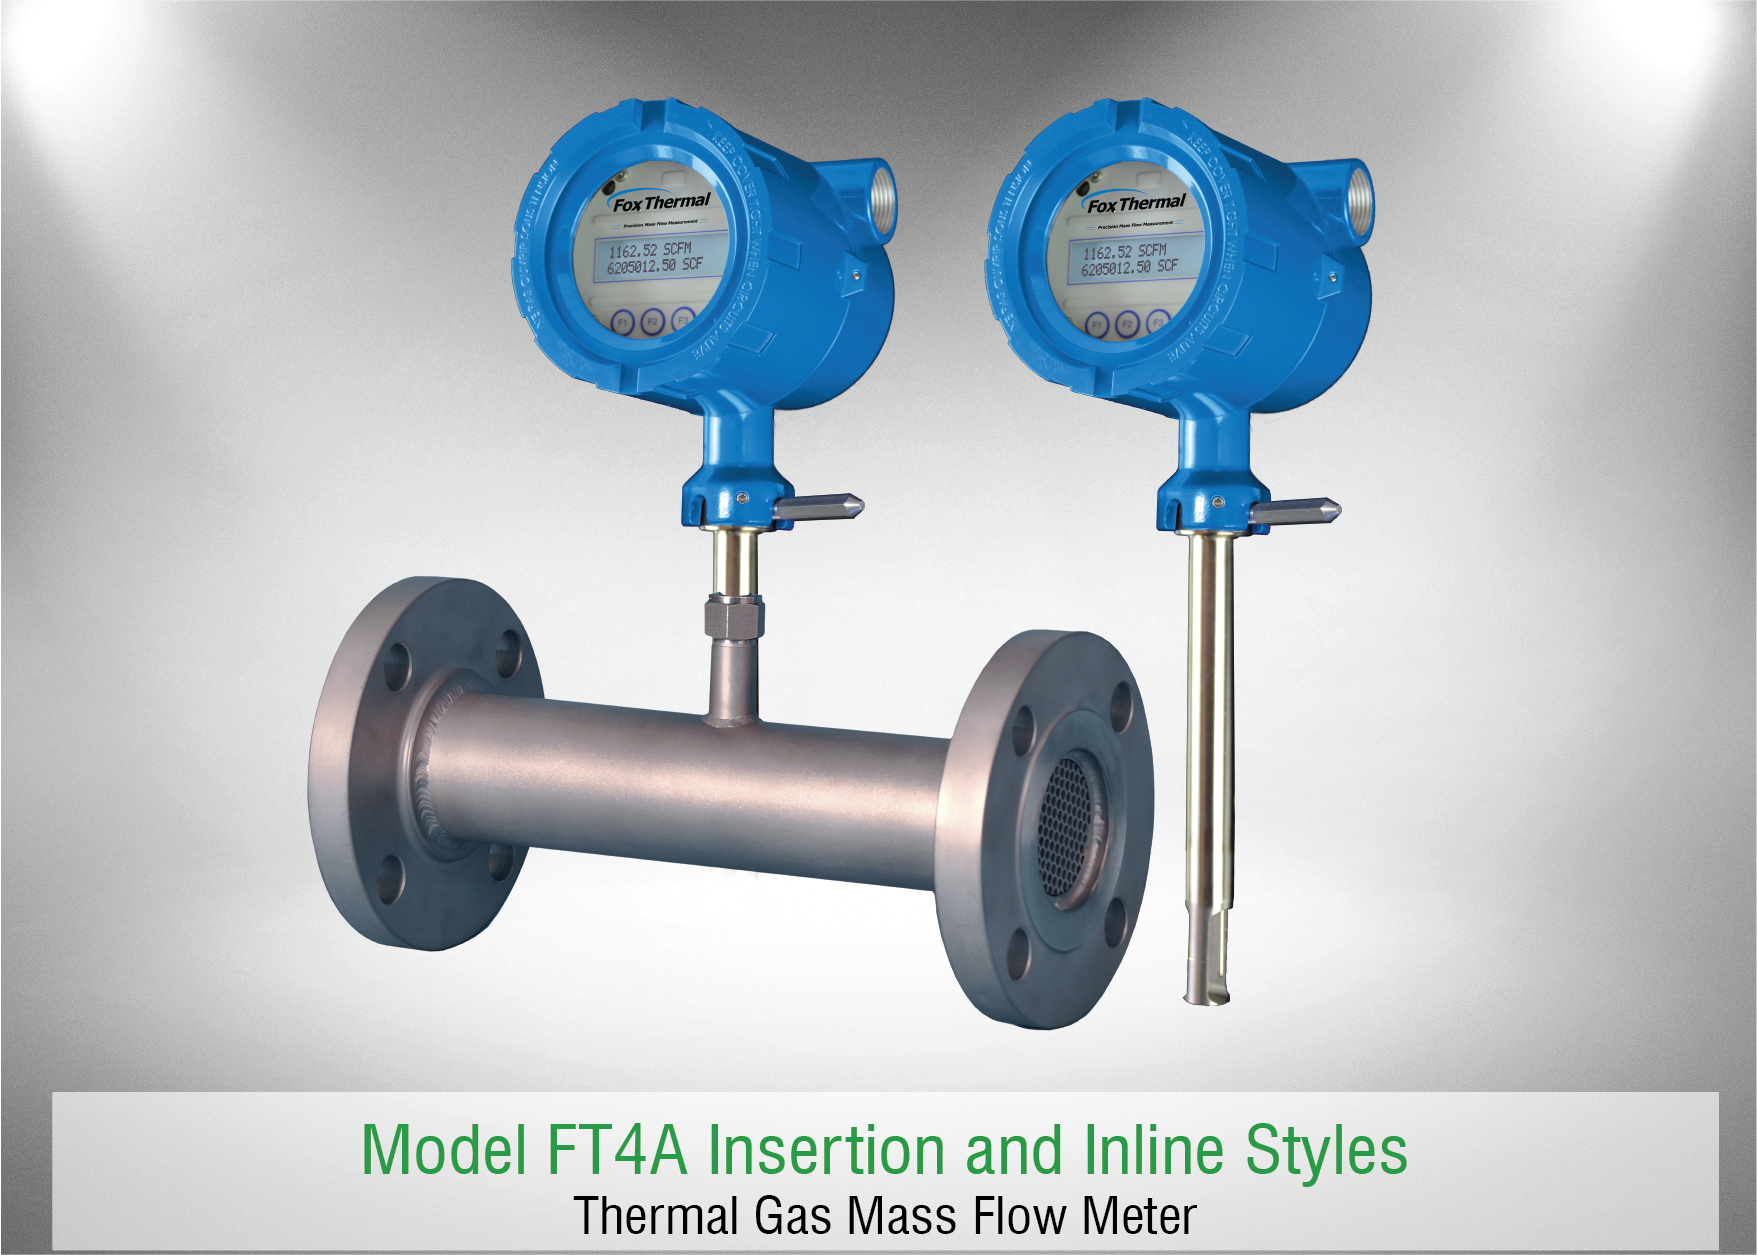 Fox Thermal Model FT4A Flow Meter